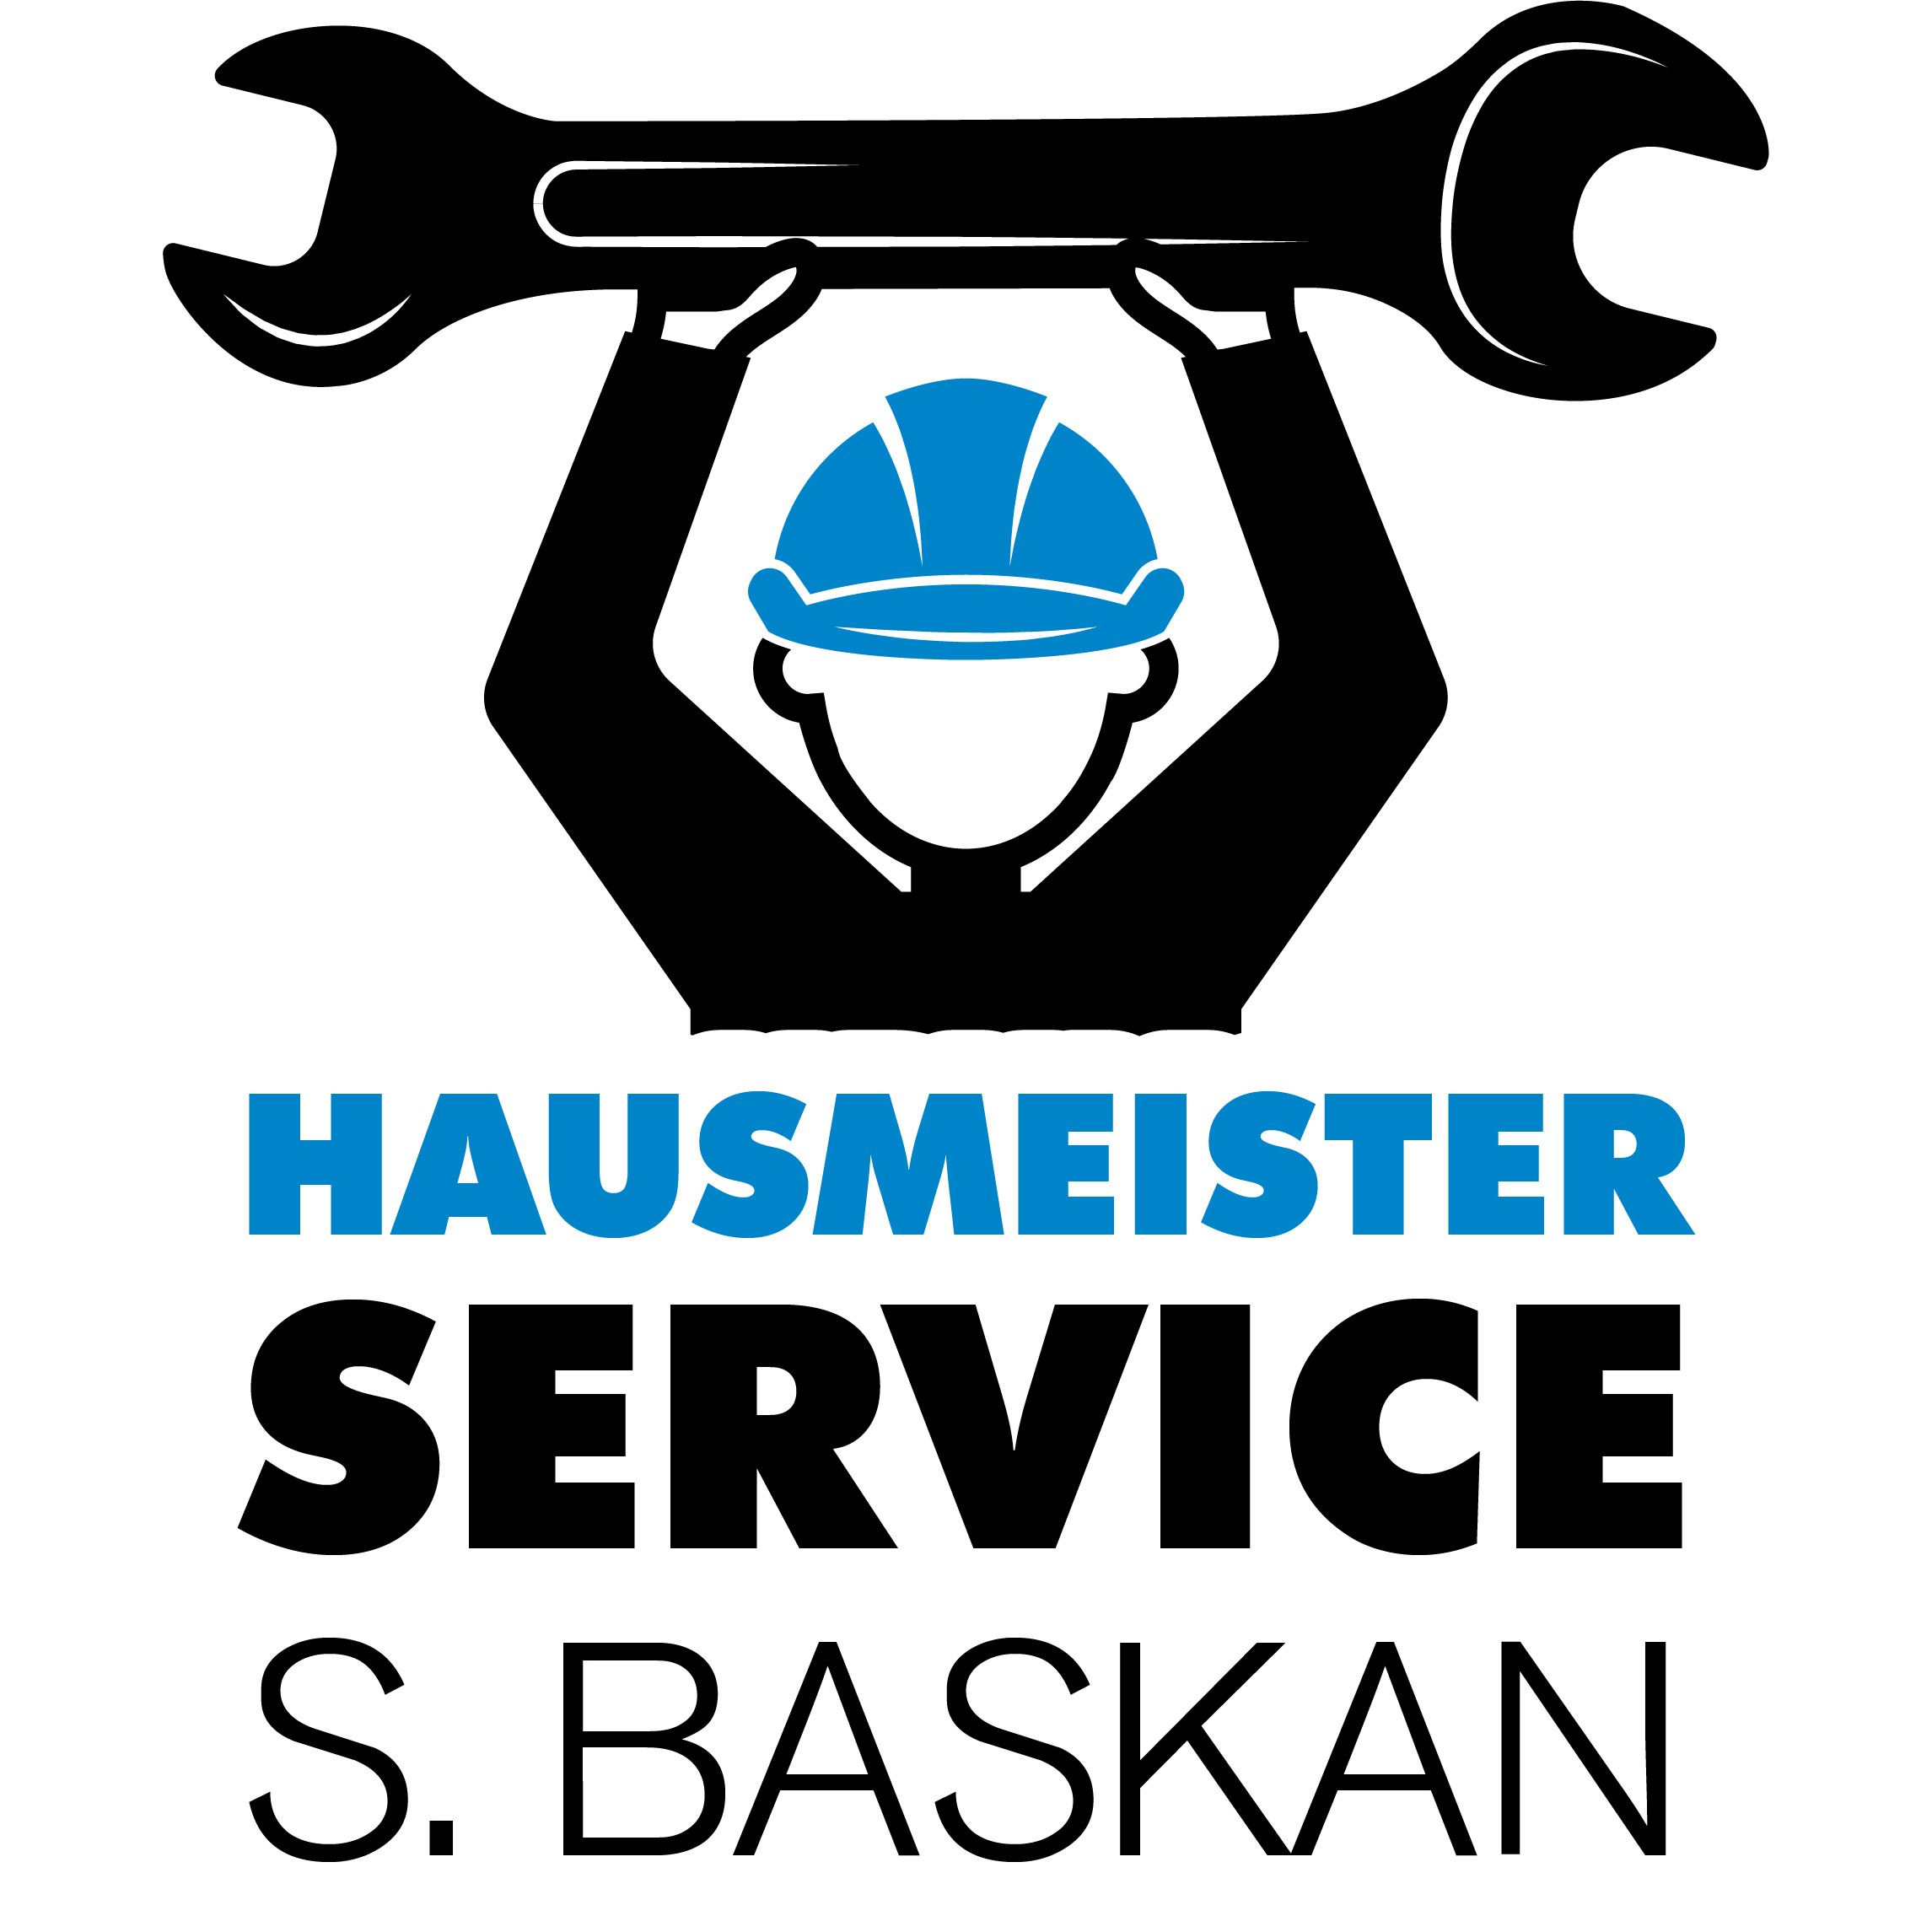 Hausmeister Service S. Baskan in Wilhelmshaven - Logo